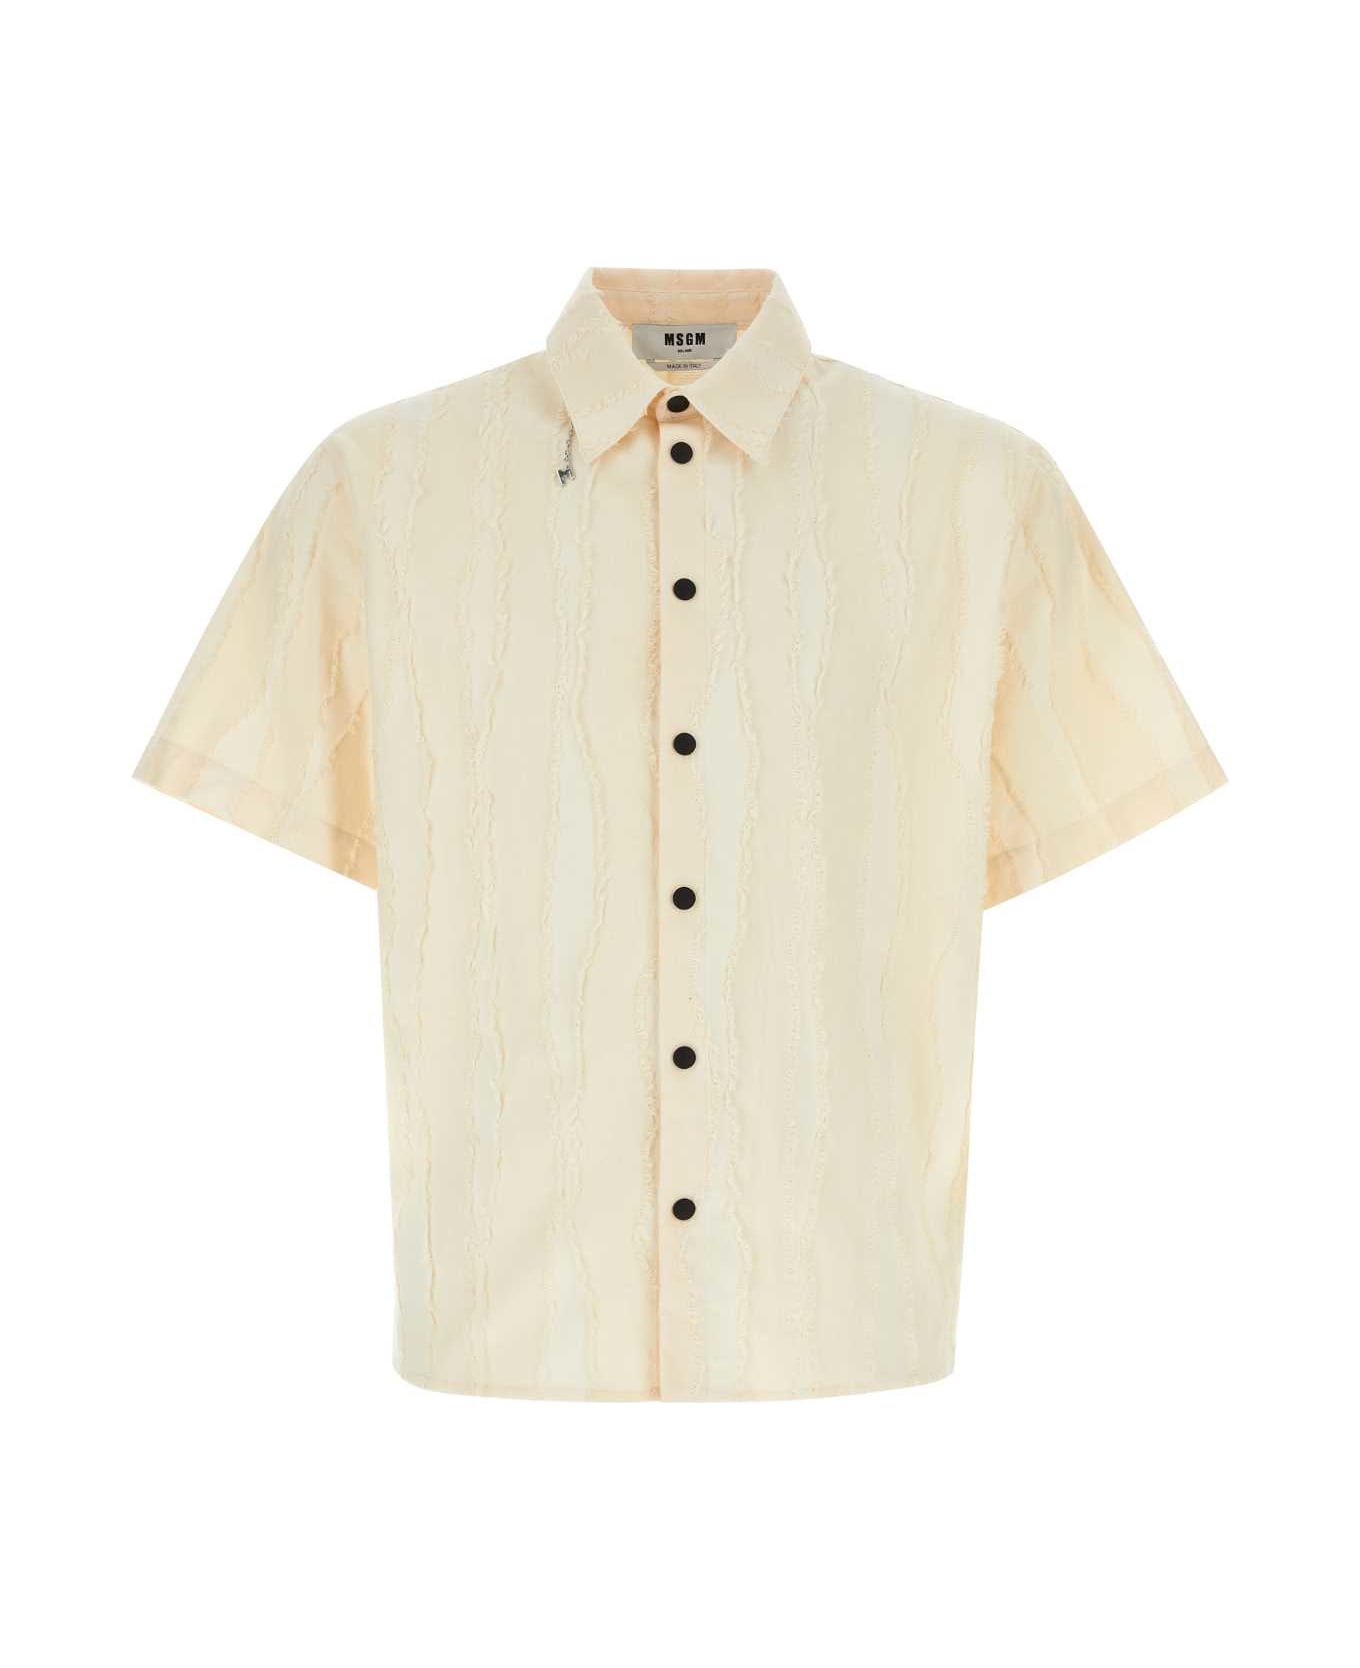 MSGM Cream Cotton Shirt - 04